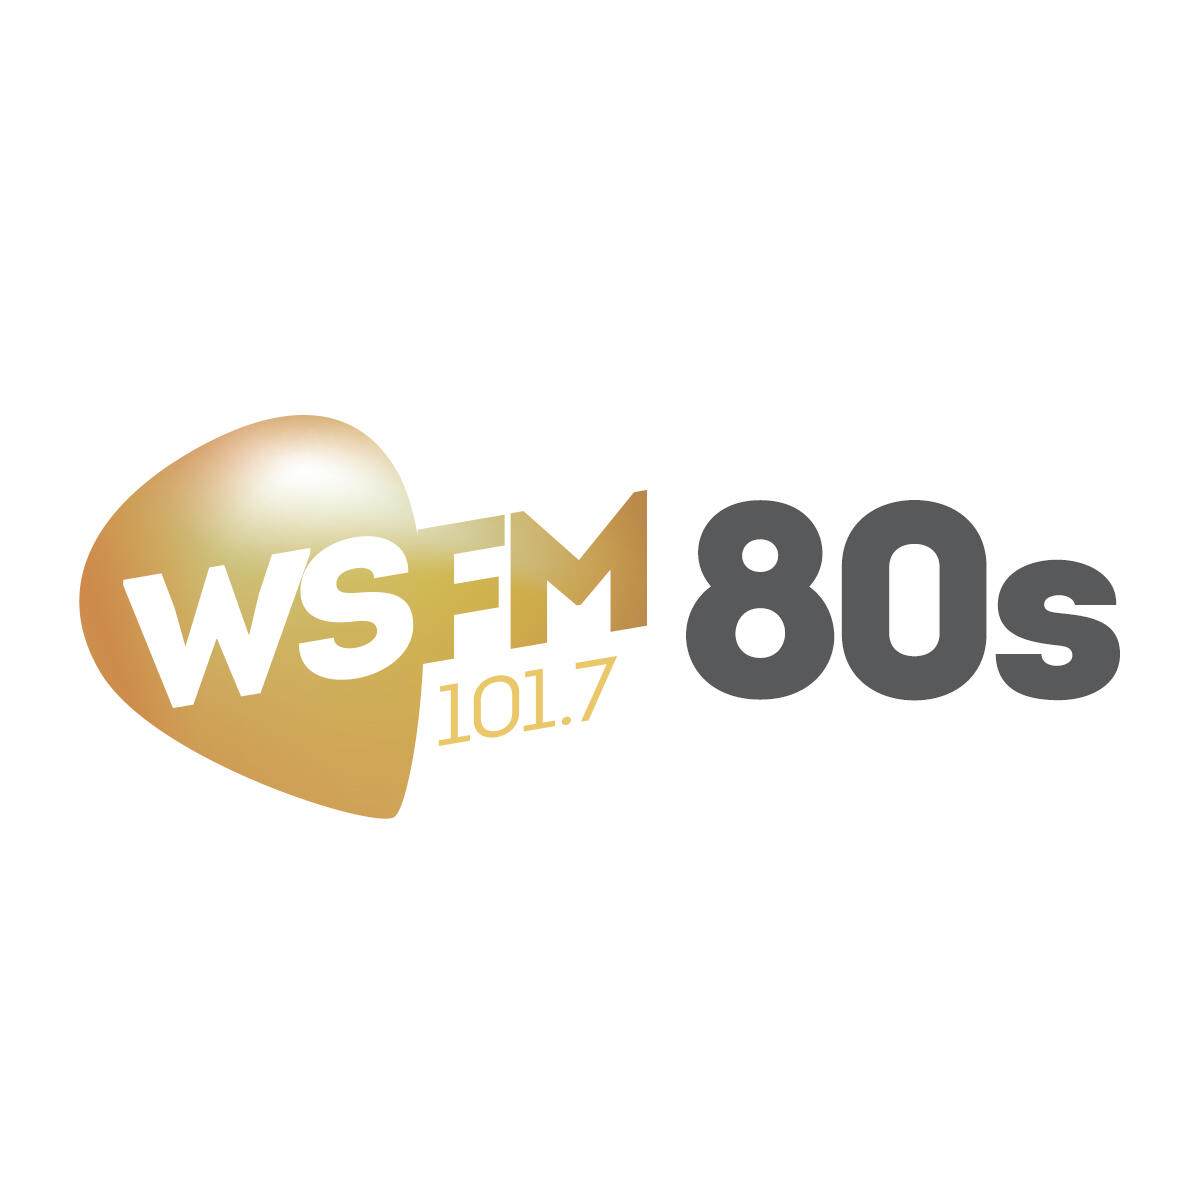 WSFM 80s